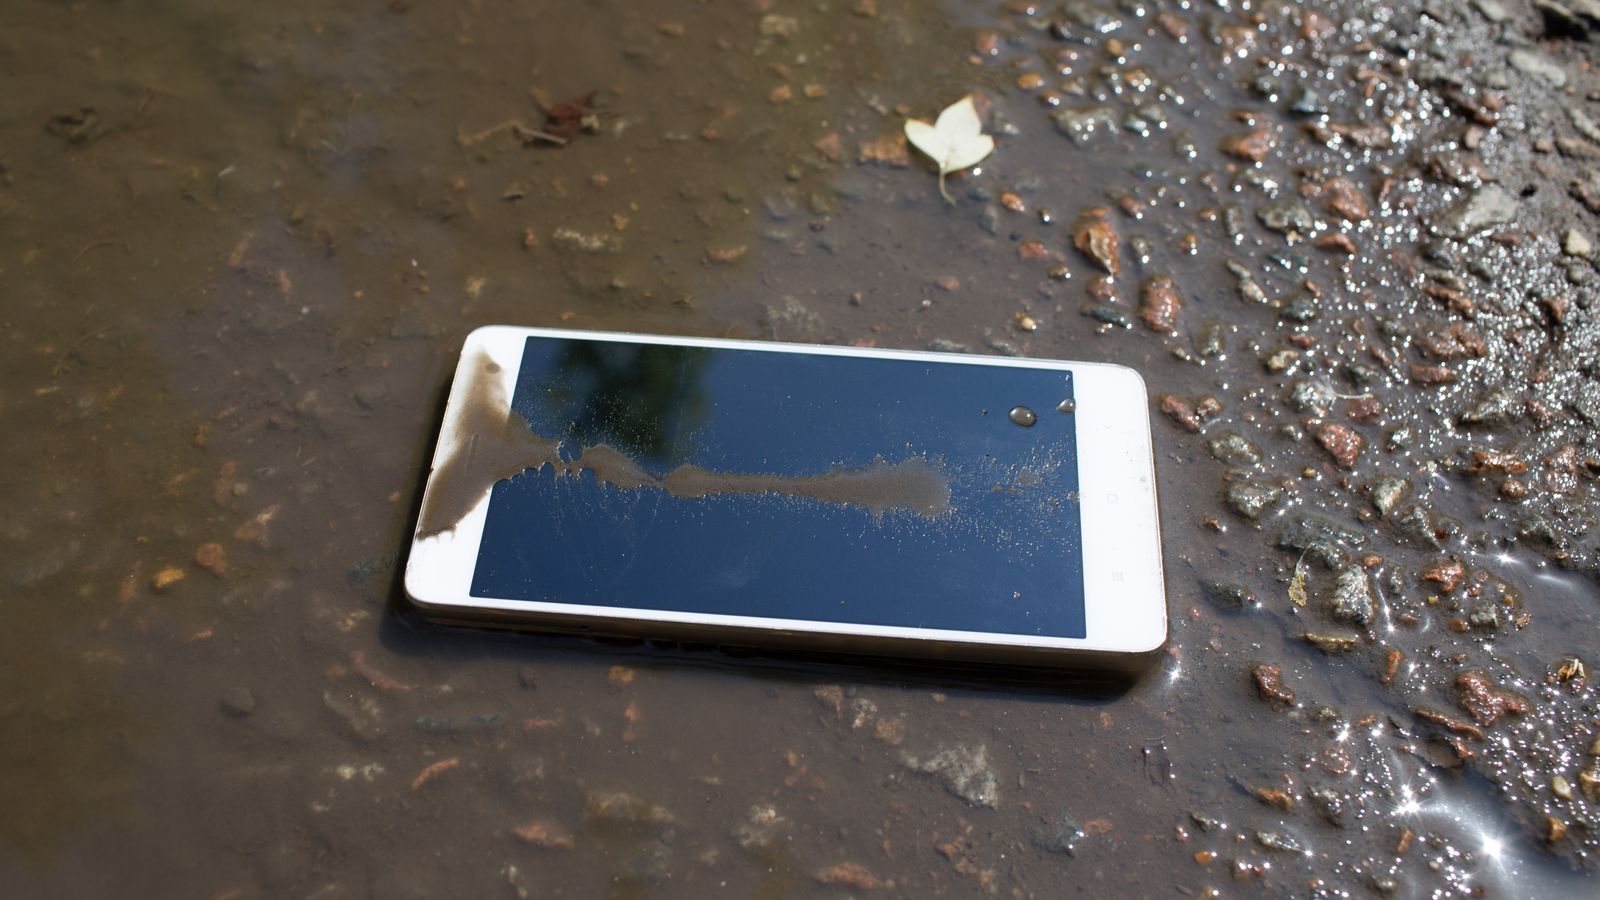 phone in puddle mud